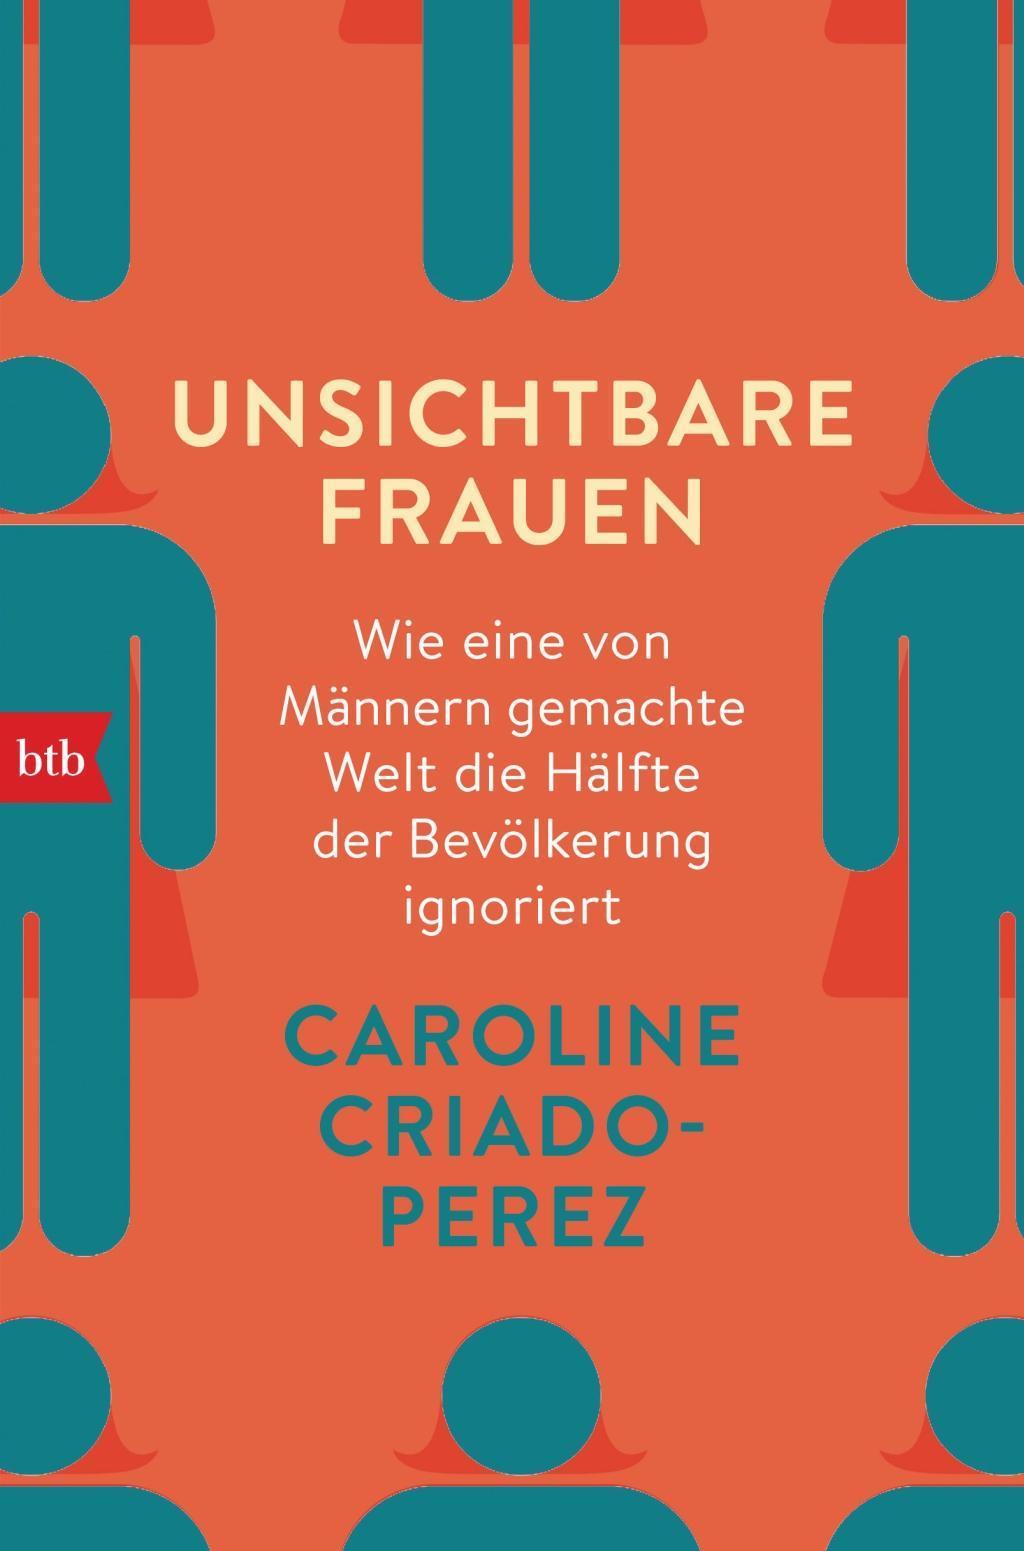 Caroline Criado Perez: Unsichtbare Frauen (btb)